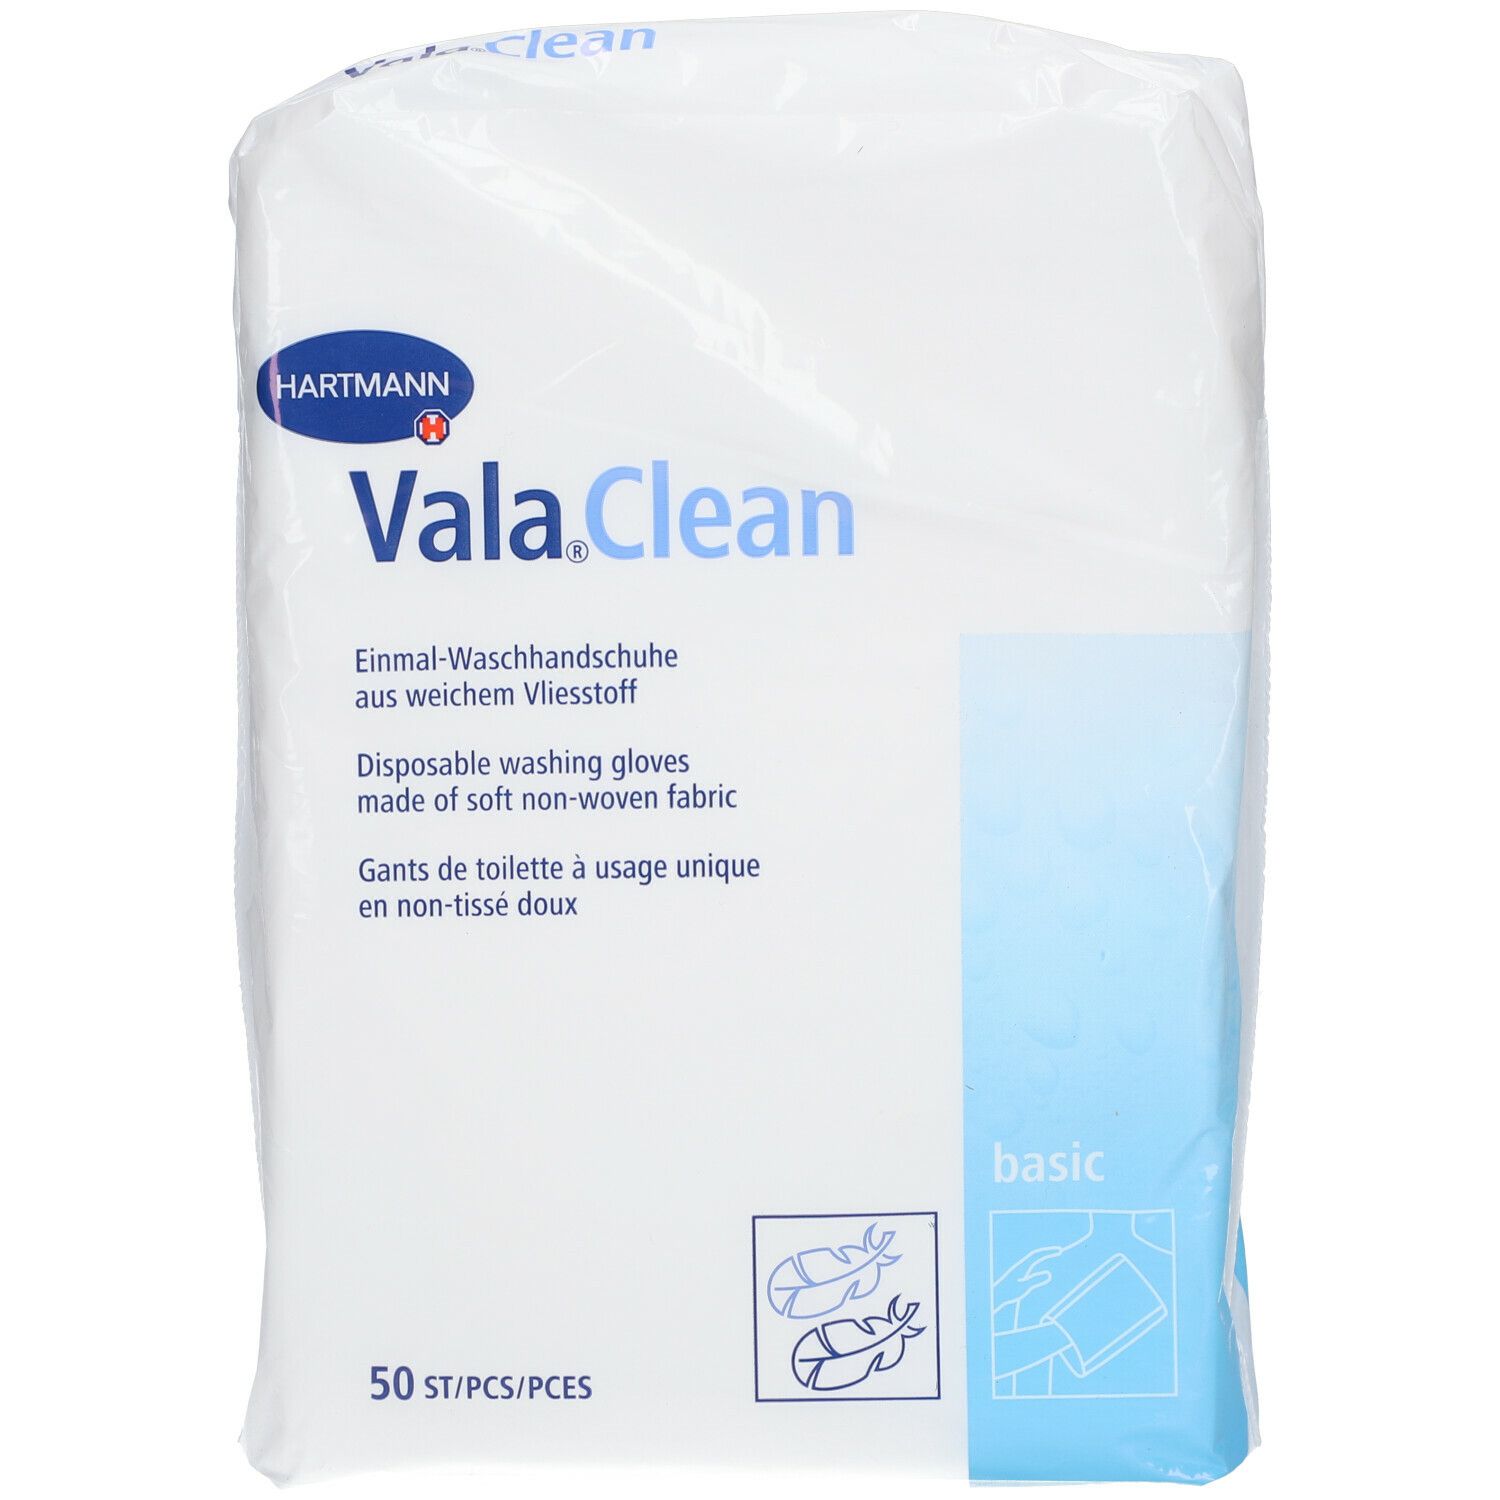 Vala®Clean basic Einmal-Waschhandschuhe